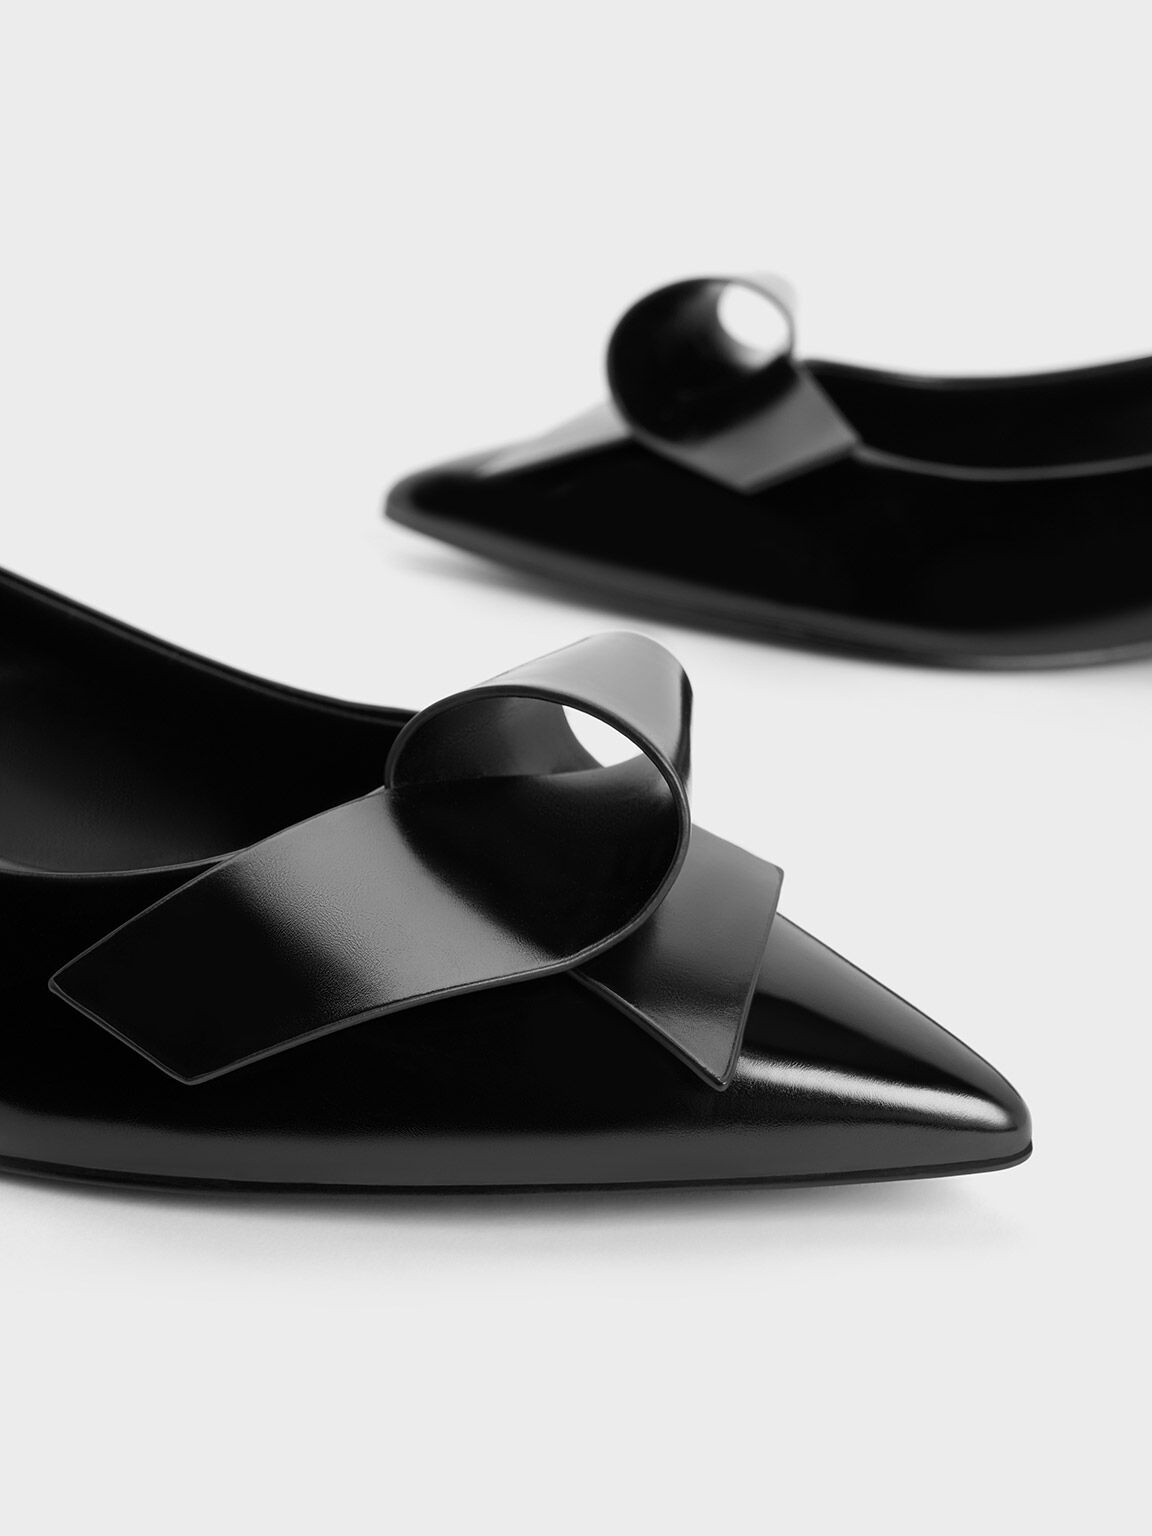 Sculptural Knot Pointed-Toe Flats, หนังเงาสีดำ, hi-res